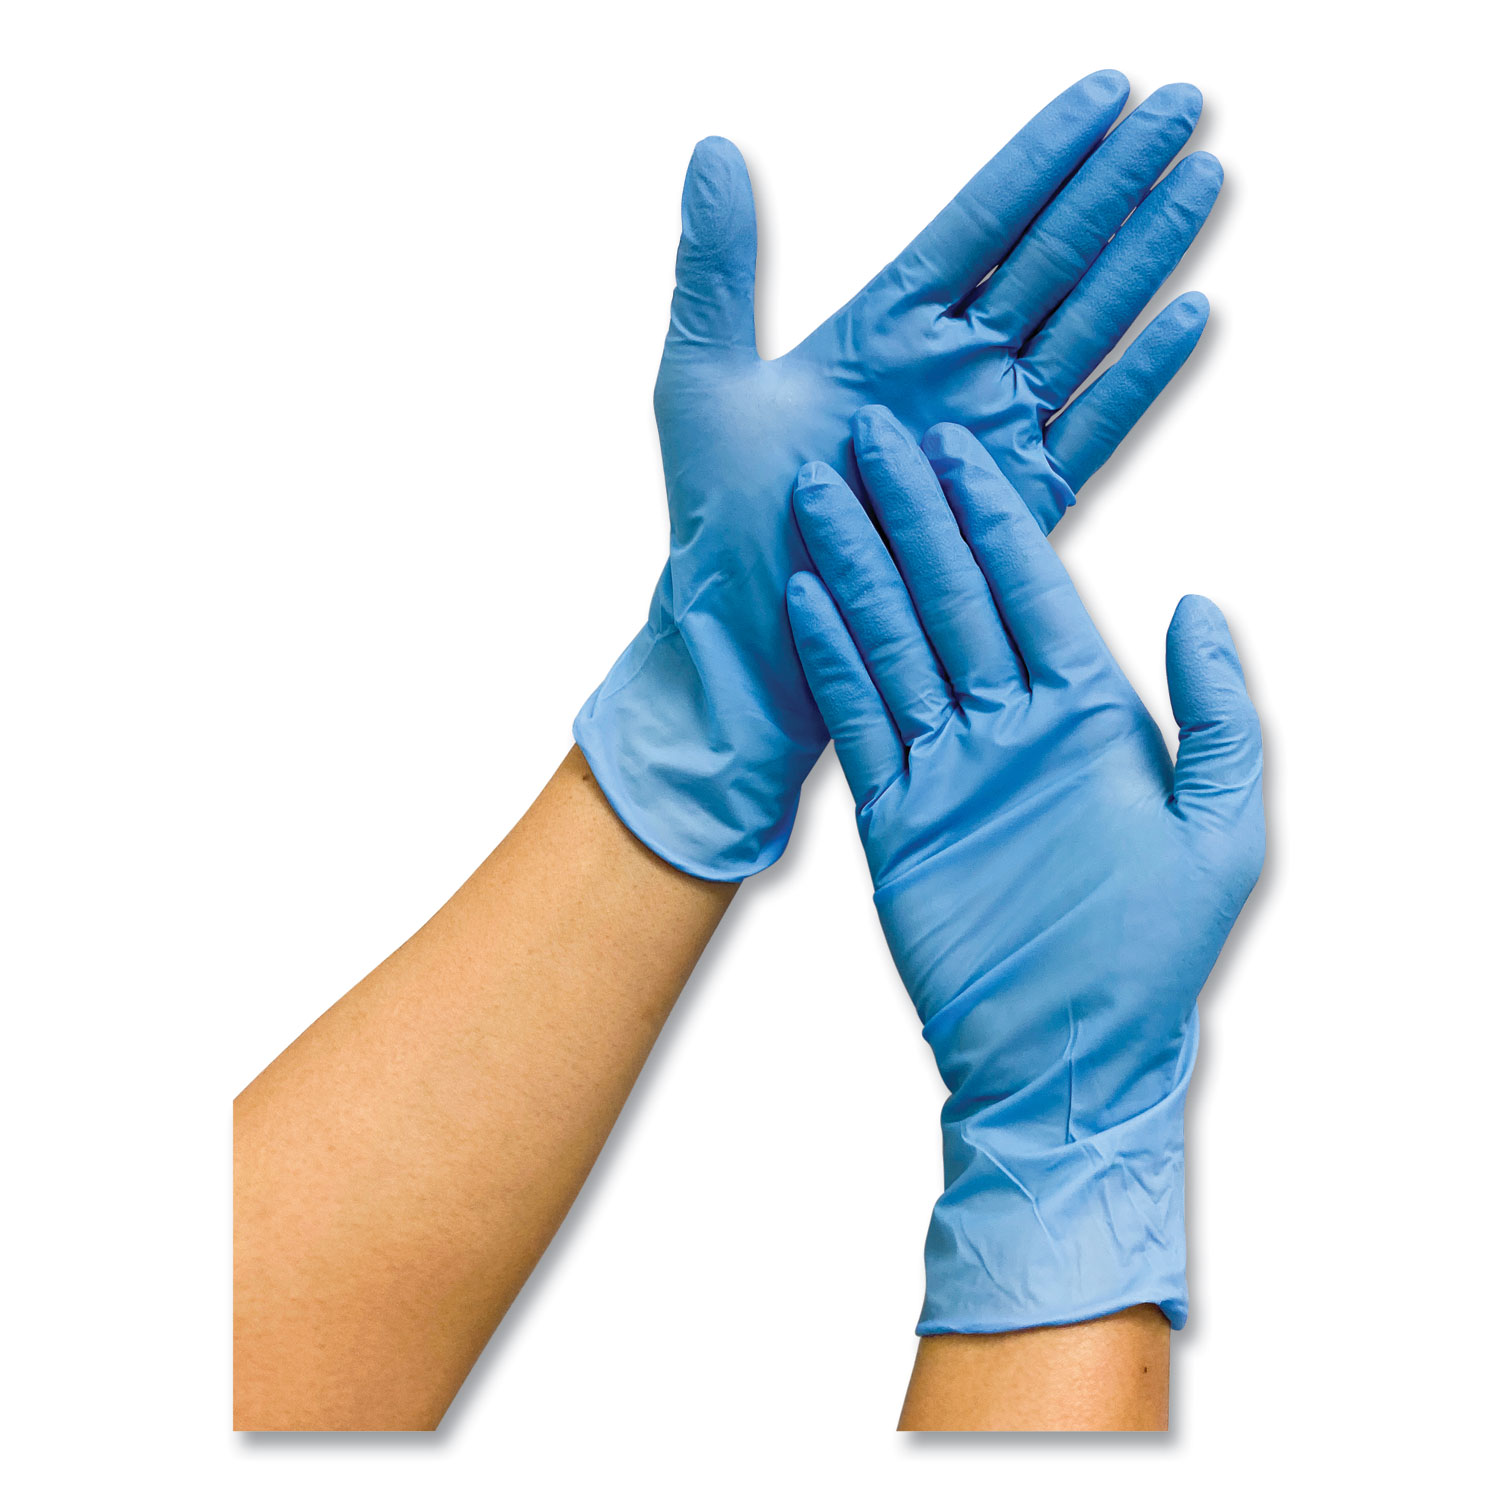  GN1 PE16918 Powder-Free Nitrile Gloves, Blue, Medium, 1,000/Carton (GN1PE16918) 